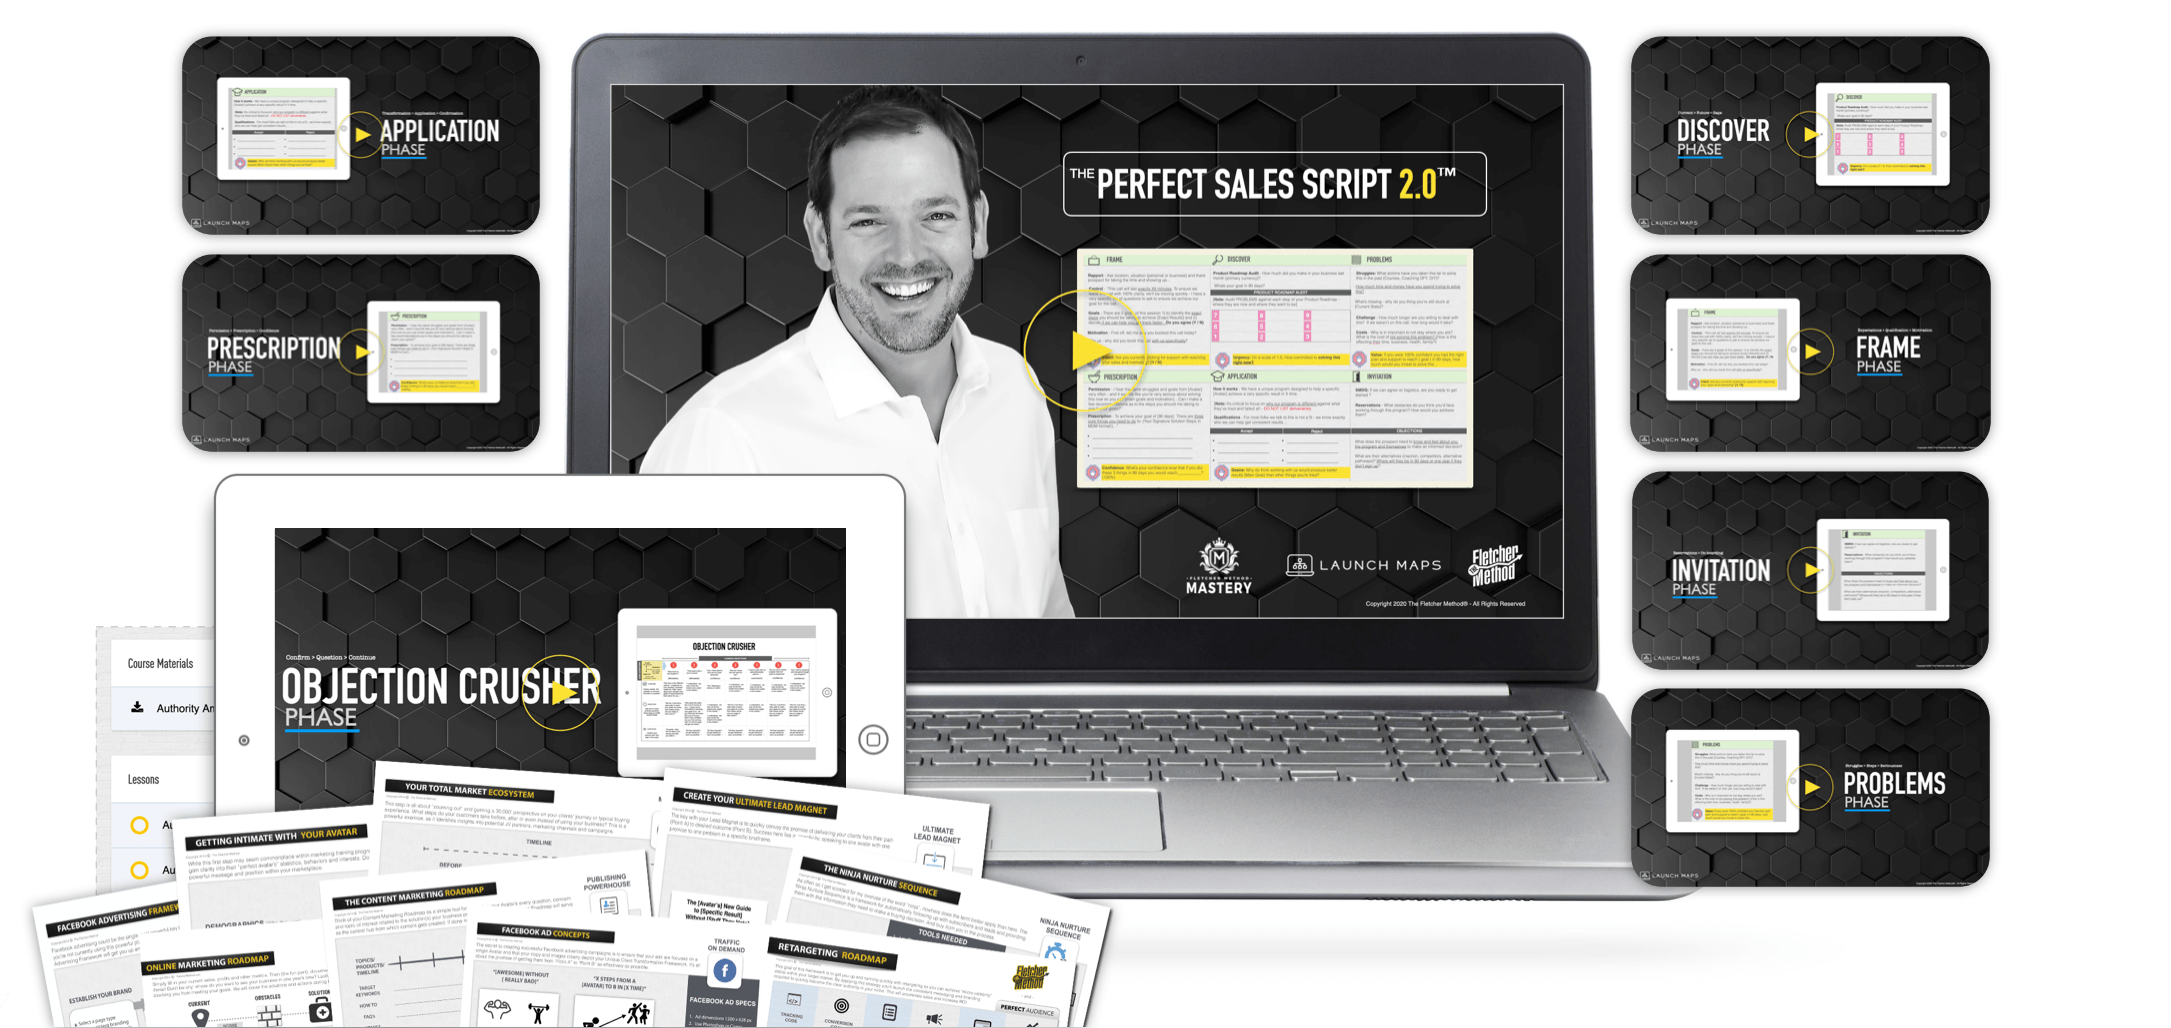 [SUPER HOT SHARE] Aaron N. Fletcher (LaunchMaps) – Perfect Sales Script 2.0 Download